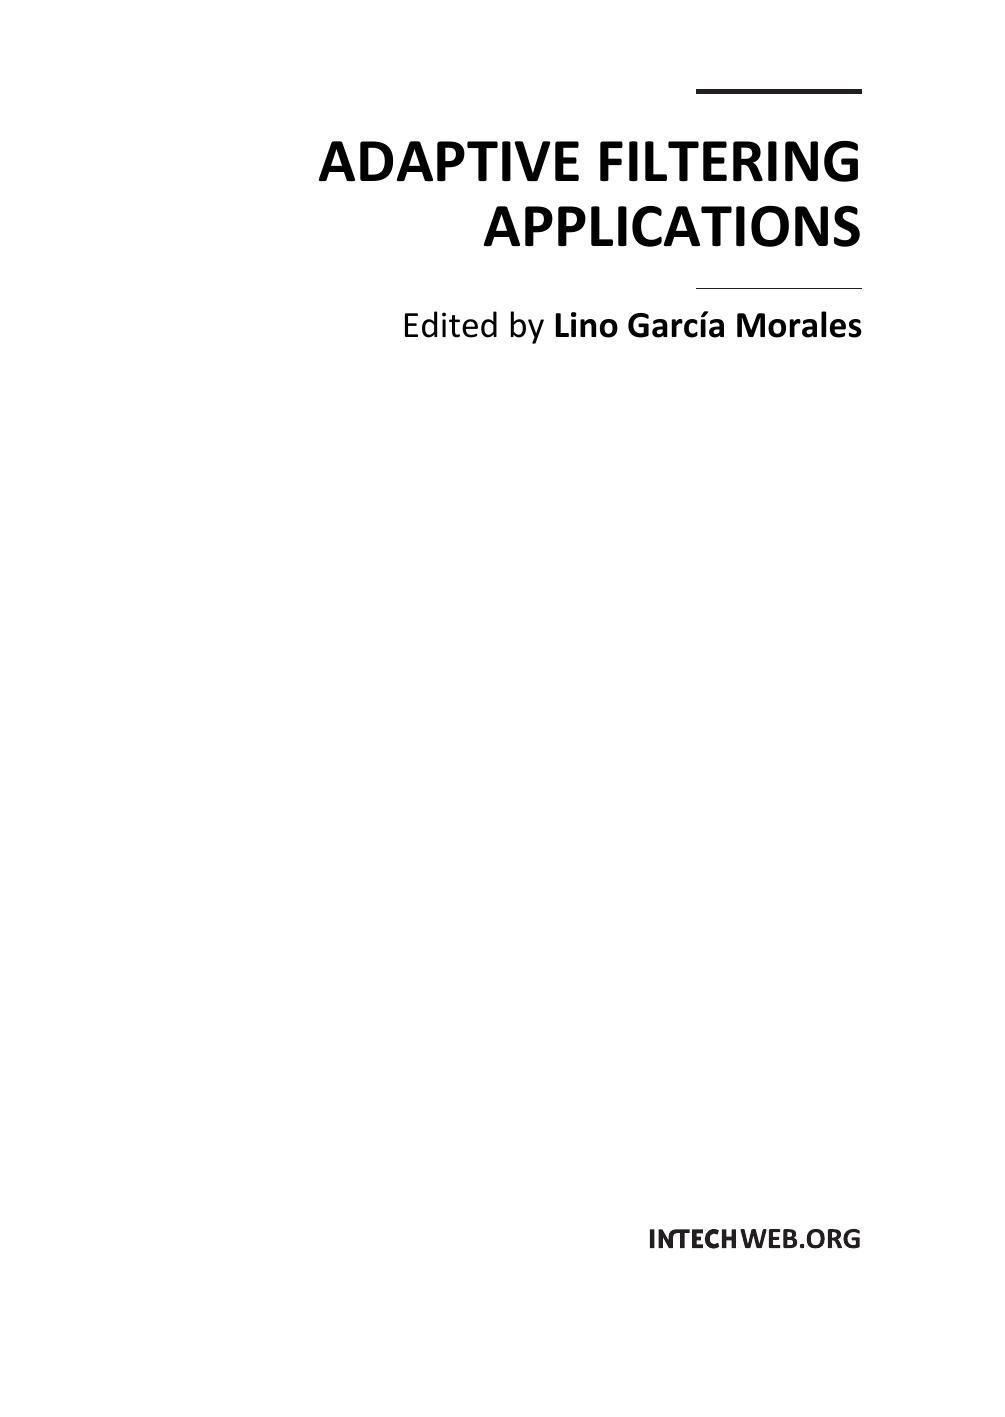 Adaptive Filtering Applications 2011.pdf